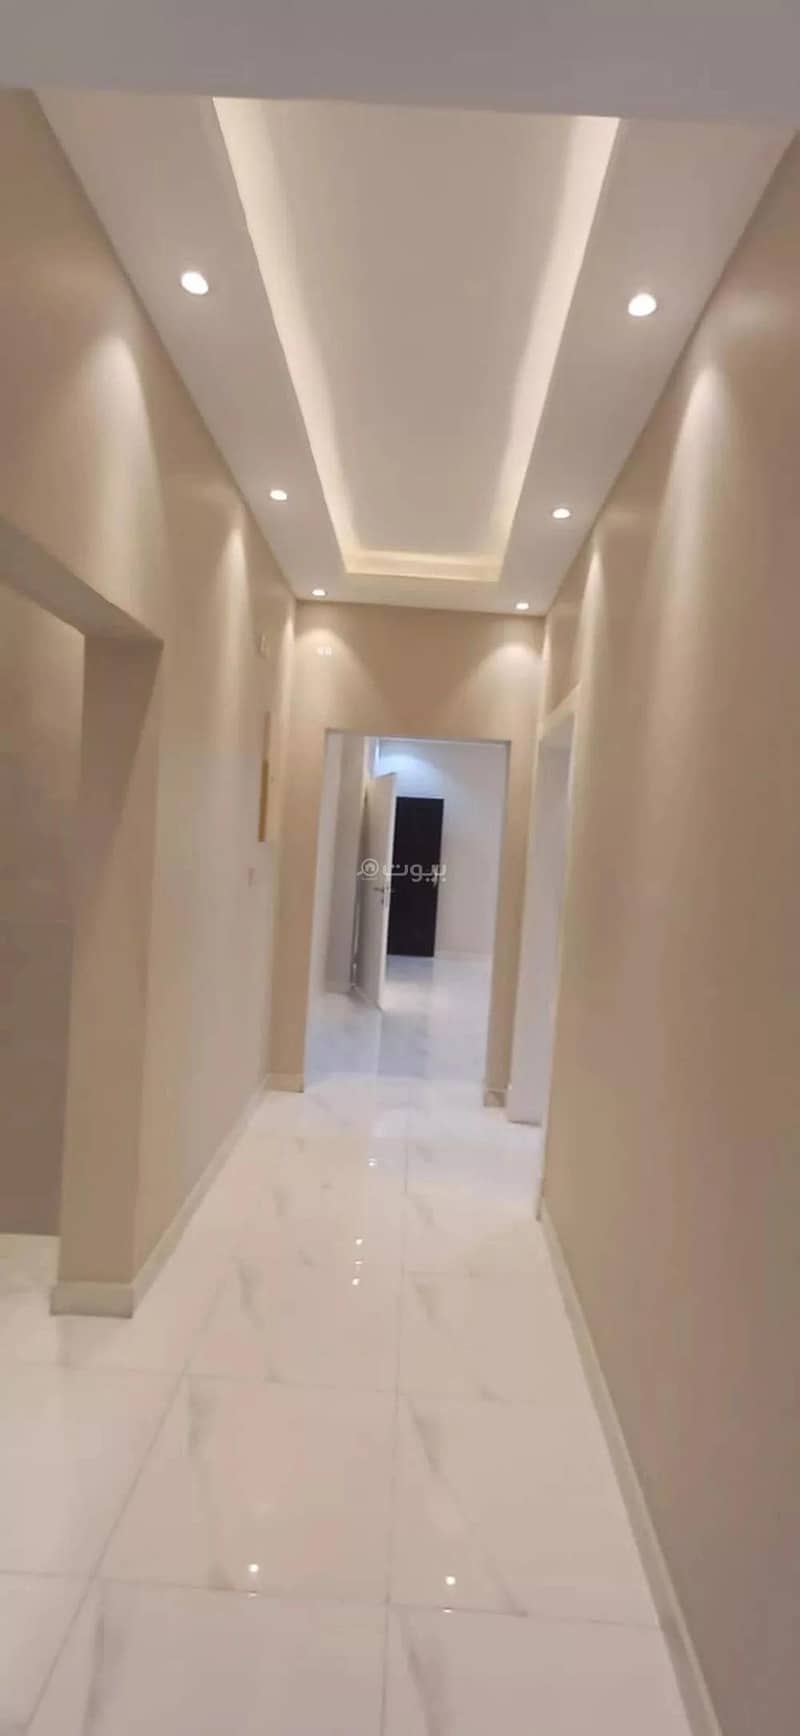 4-bedroom apartment for rent in Al Narjes neighborhood, Riyadh